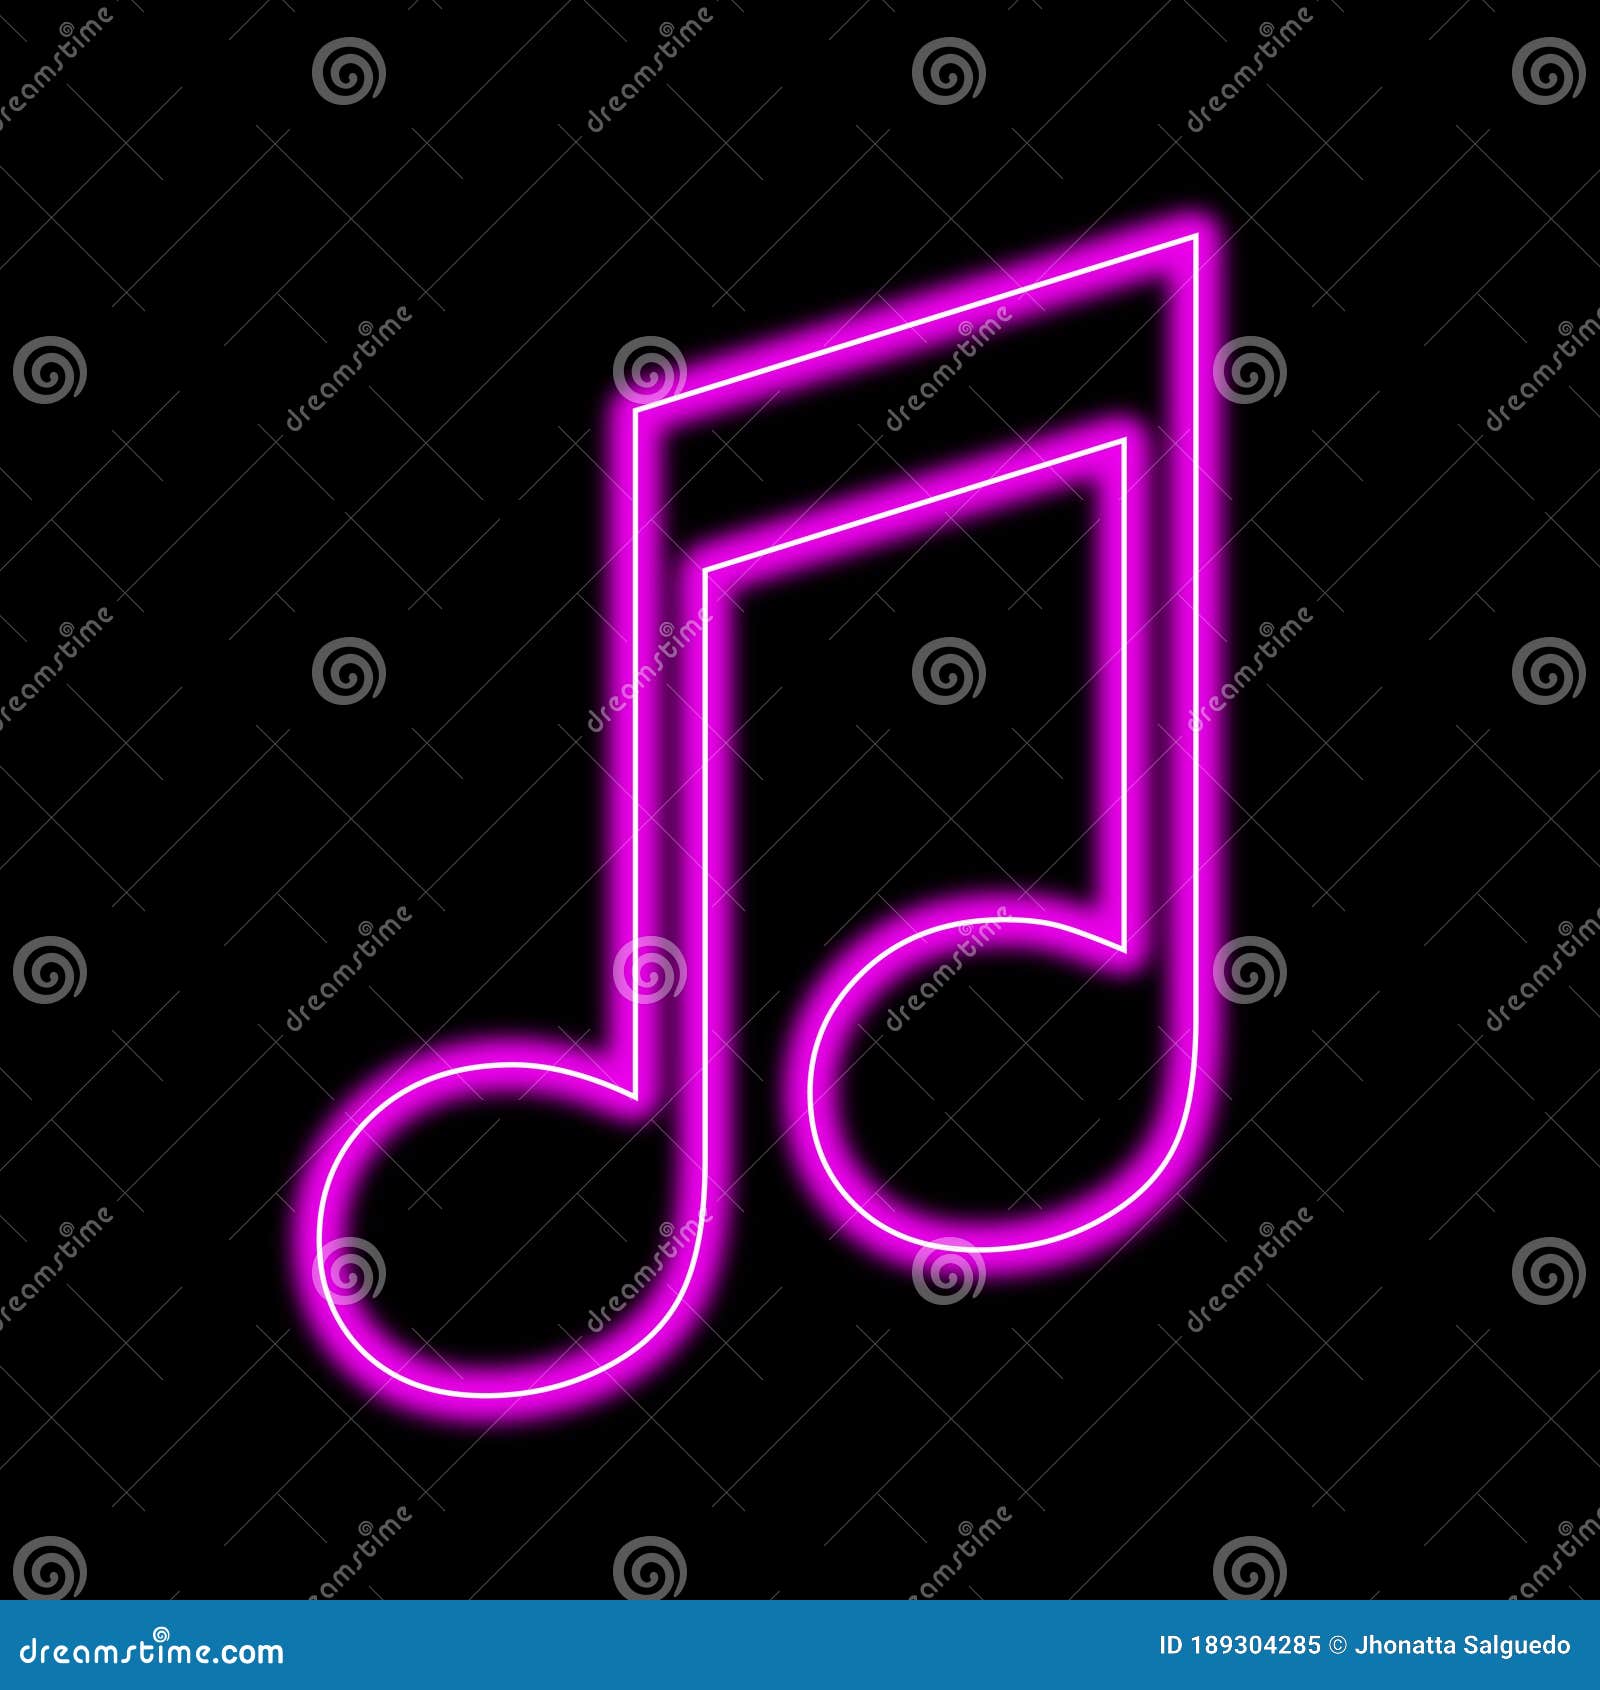 quaver pink music icon neon  on black background